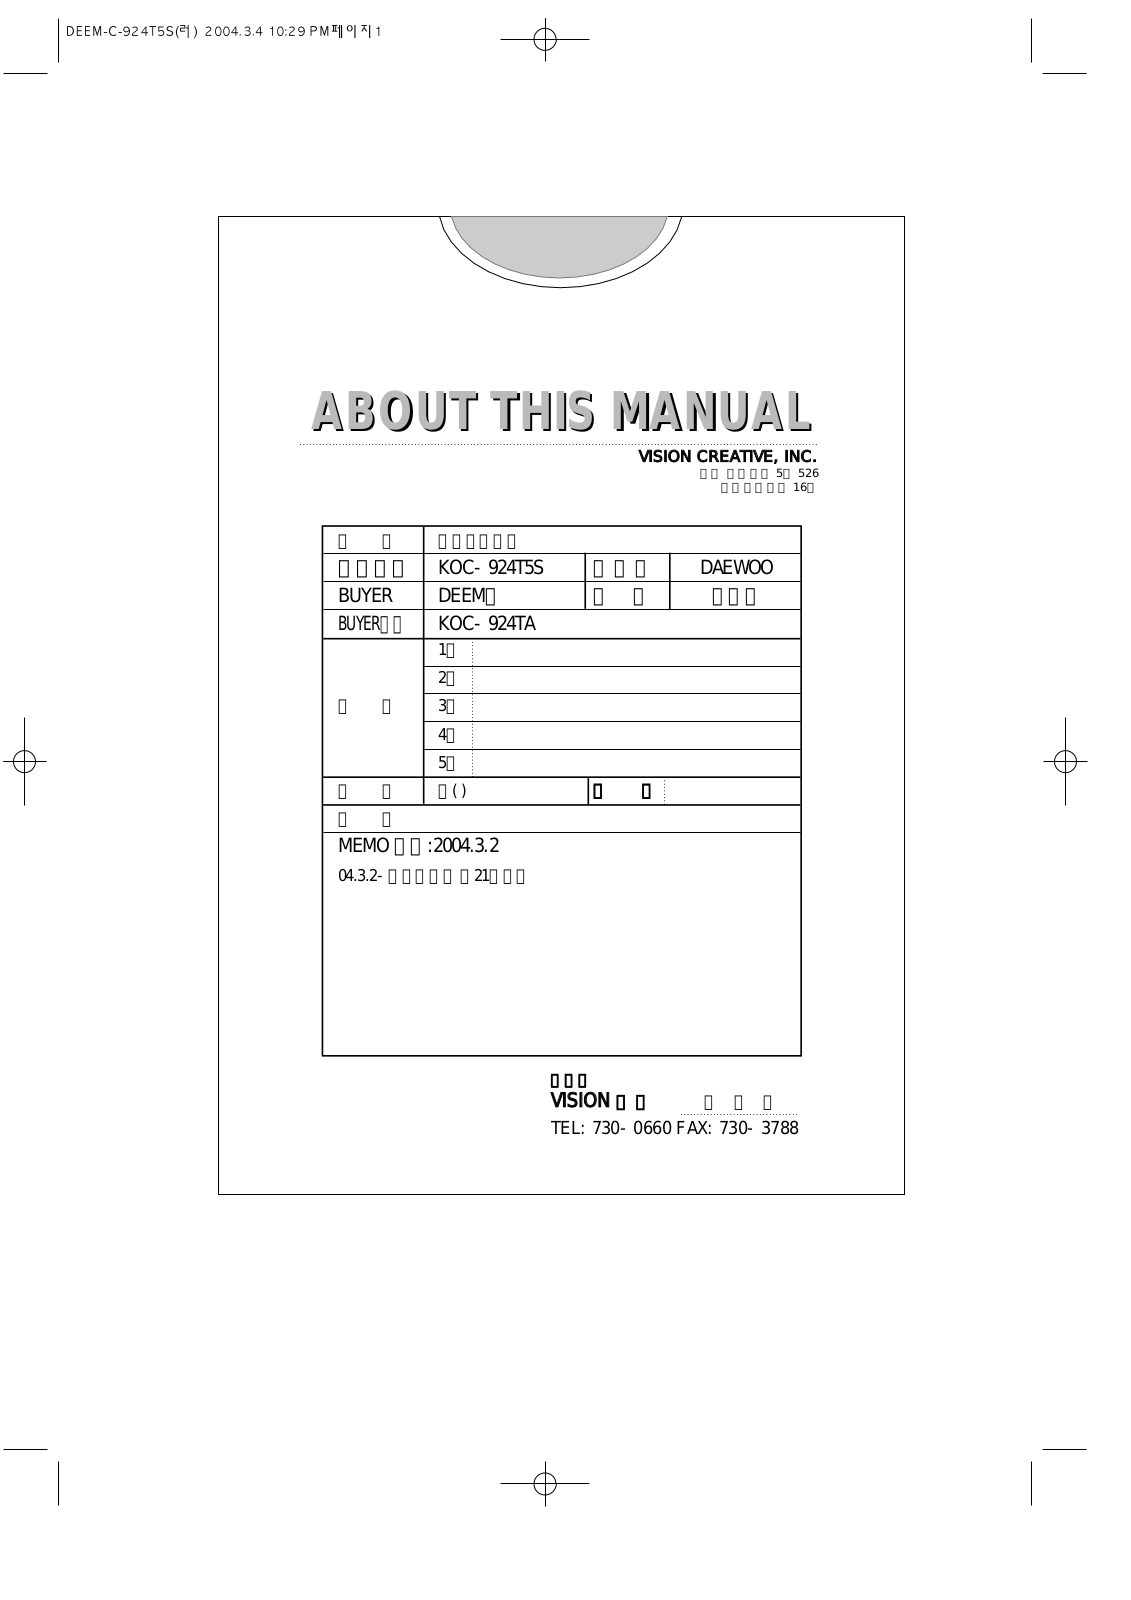 Daewoo KOC-924TA User Manual